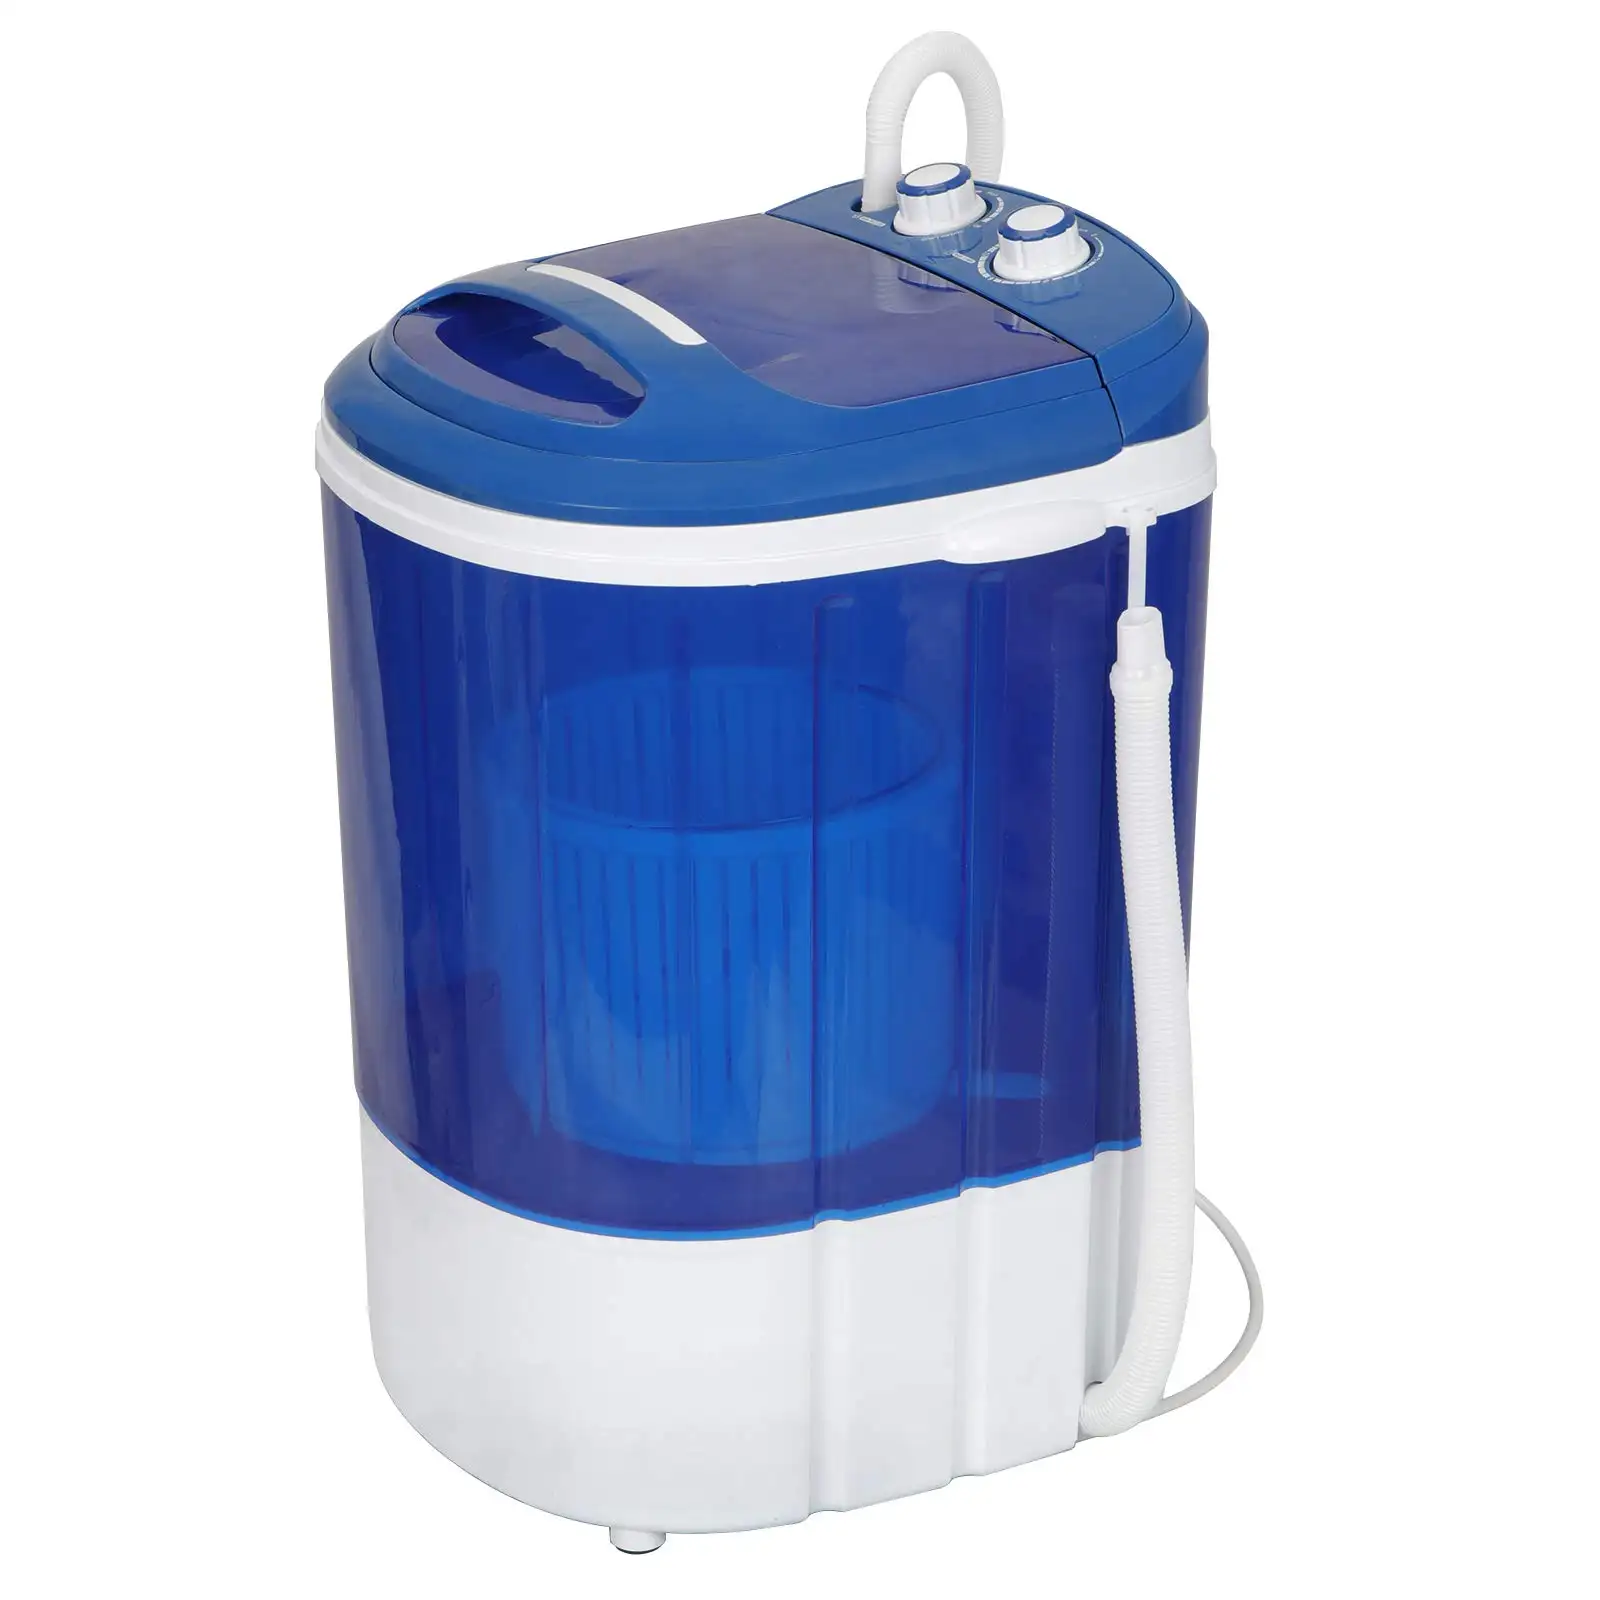 Portable Plastic Single Tub Electric Clothes Washer Shoe Washing Machine Mini Washing Machine For Baby Clothes Underwear Socks